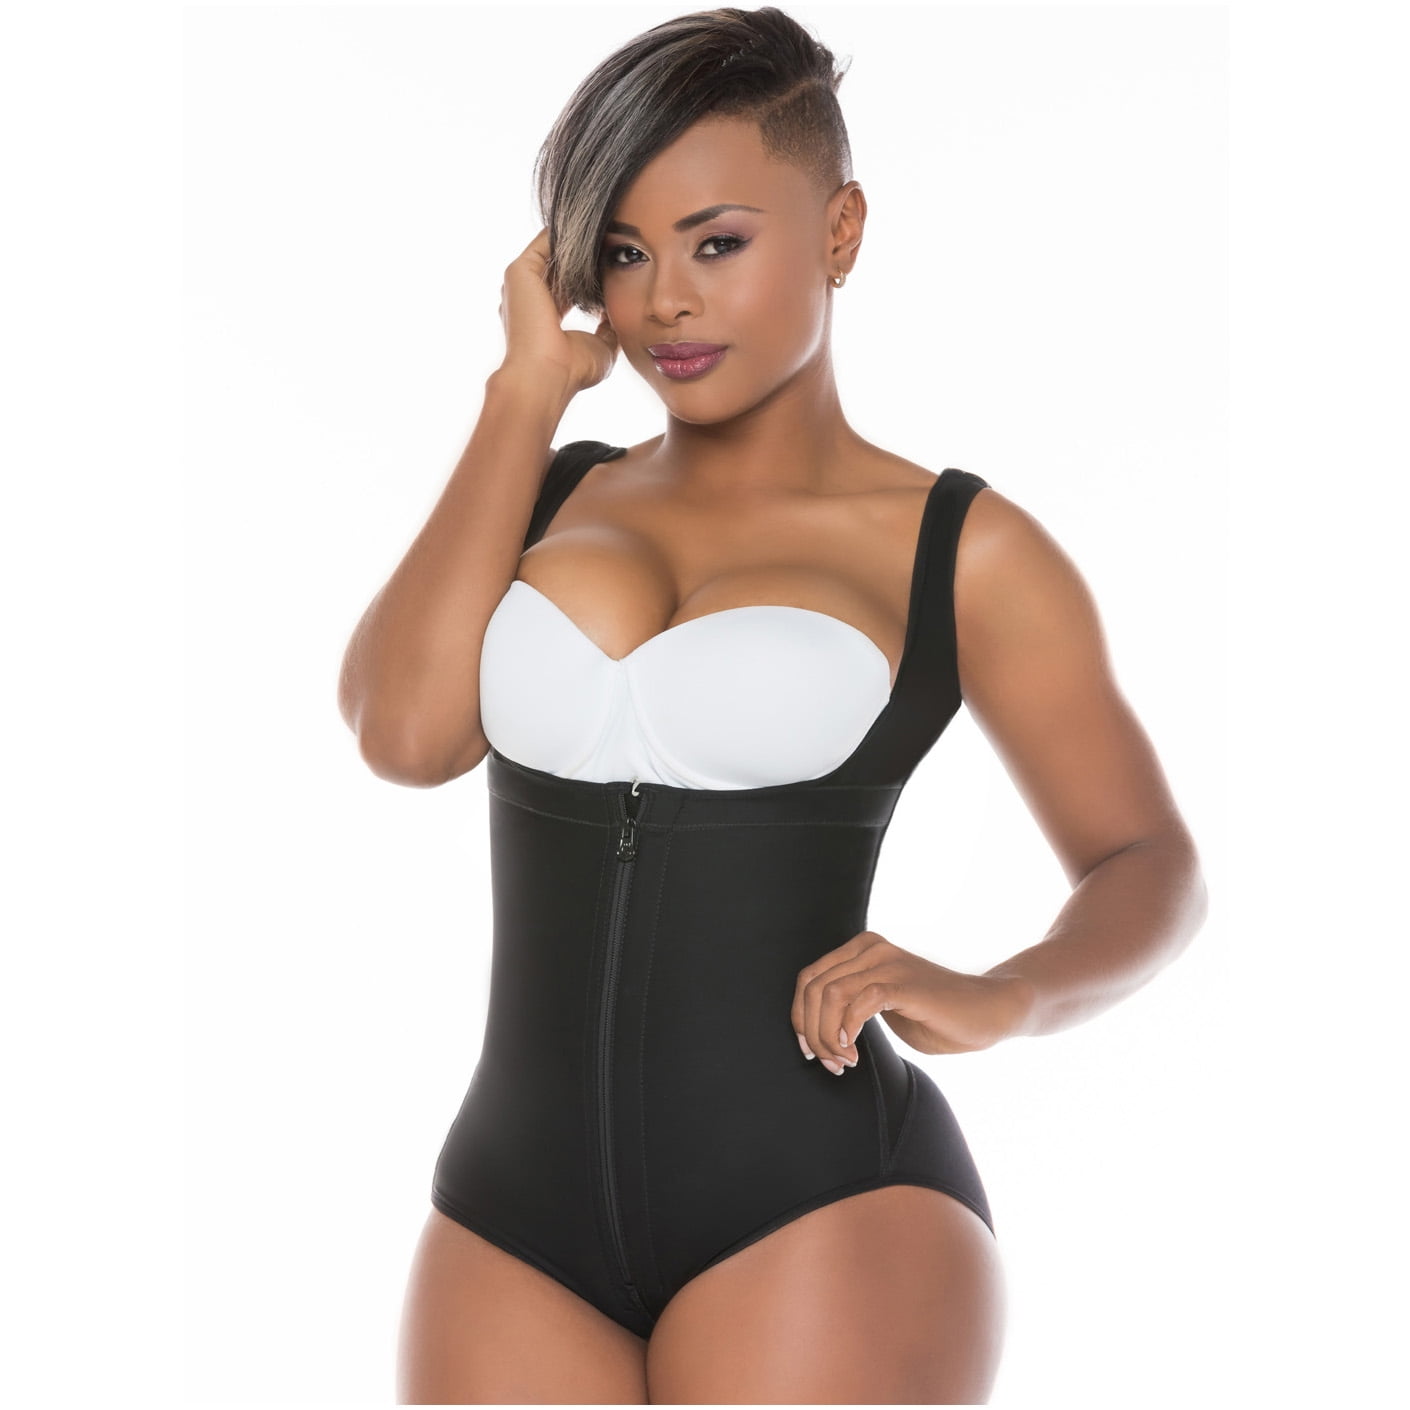 Salome 0419 Fajas Colombianas Reductoras Butt Lift Panty Girdle Bodysuit  for Women Black XS 